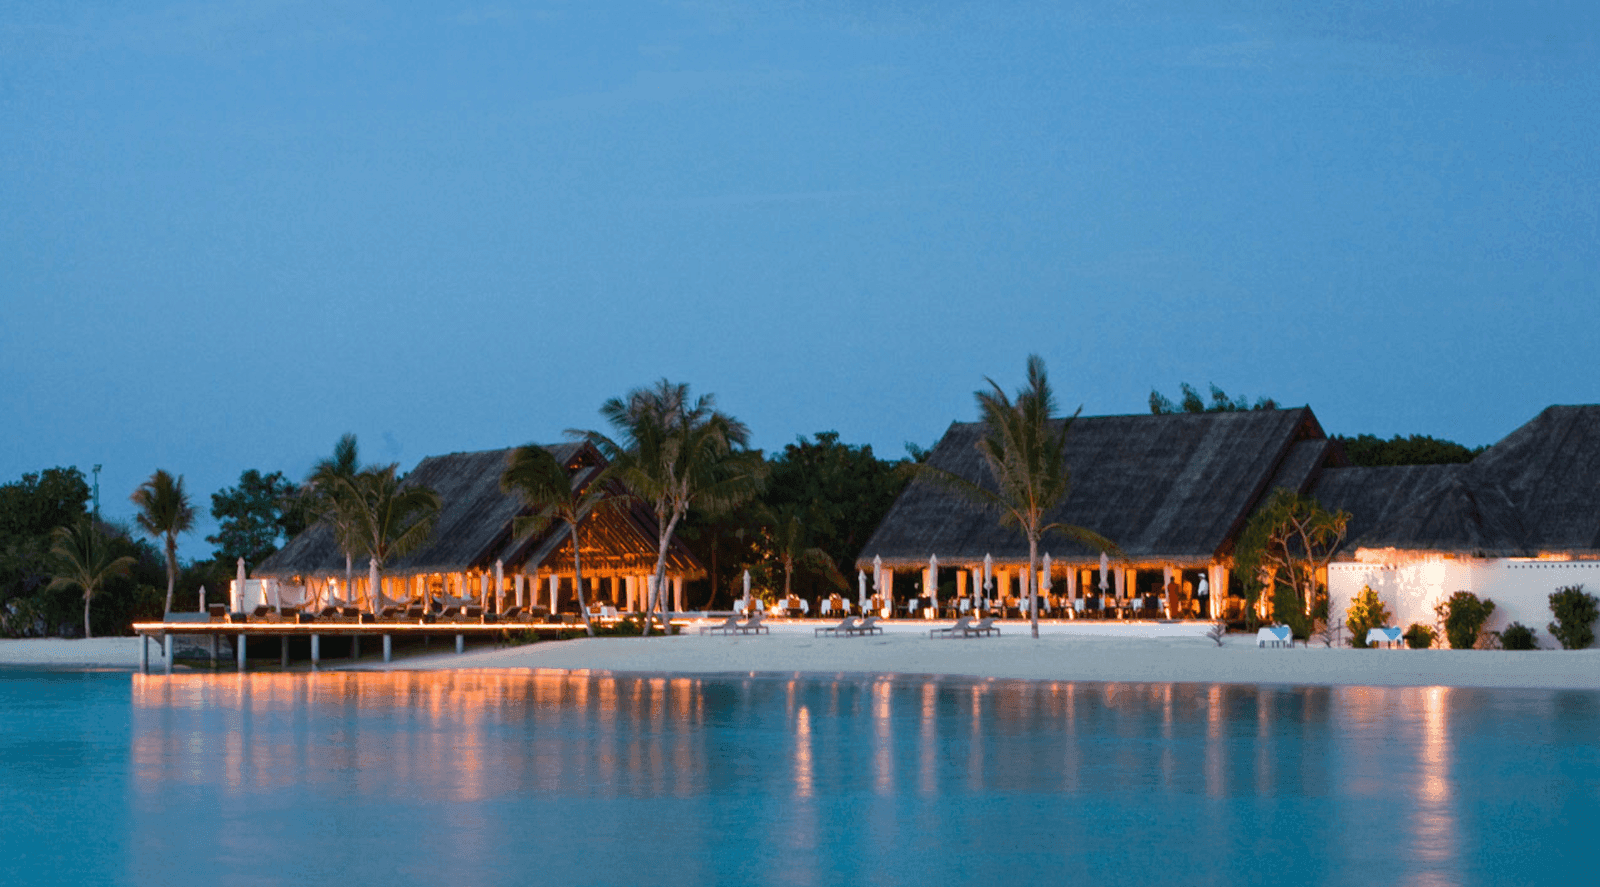 Maldives honeymoon resort